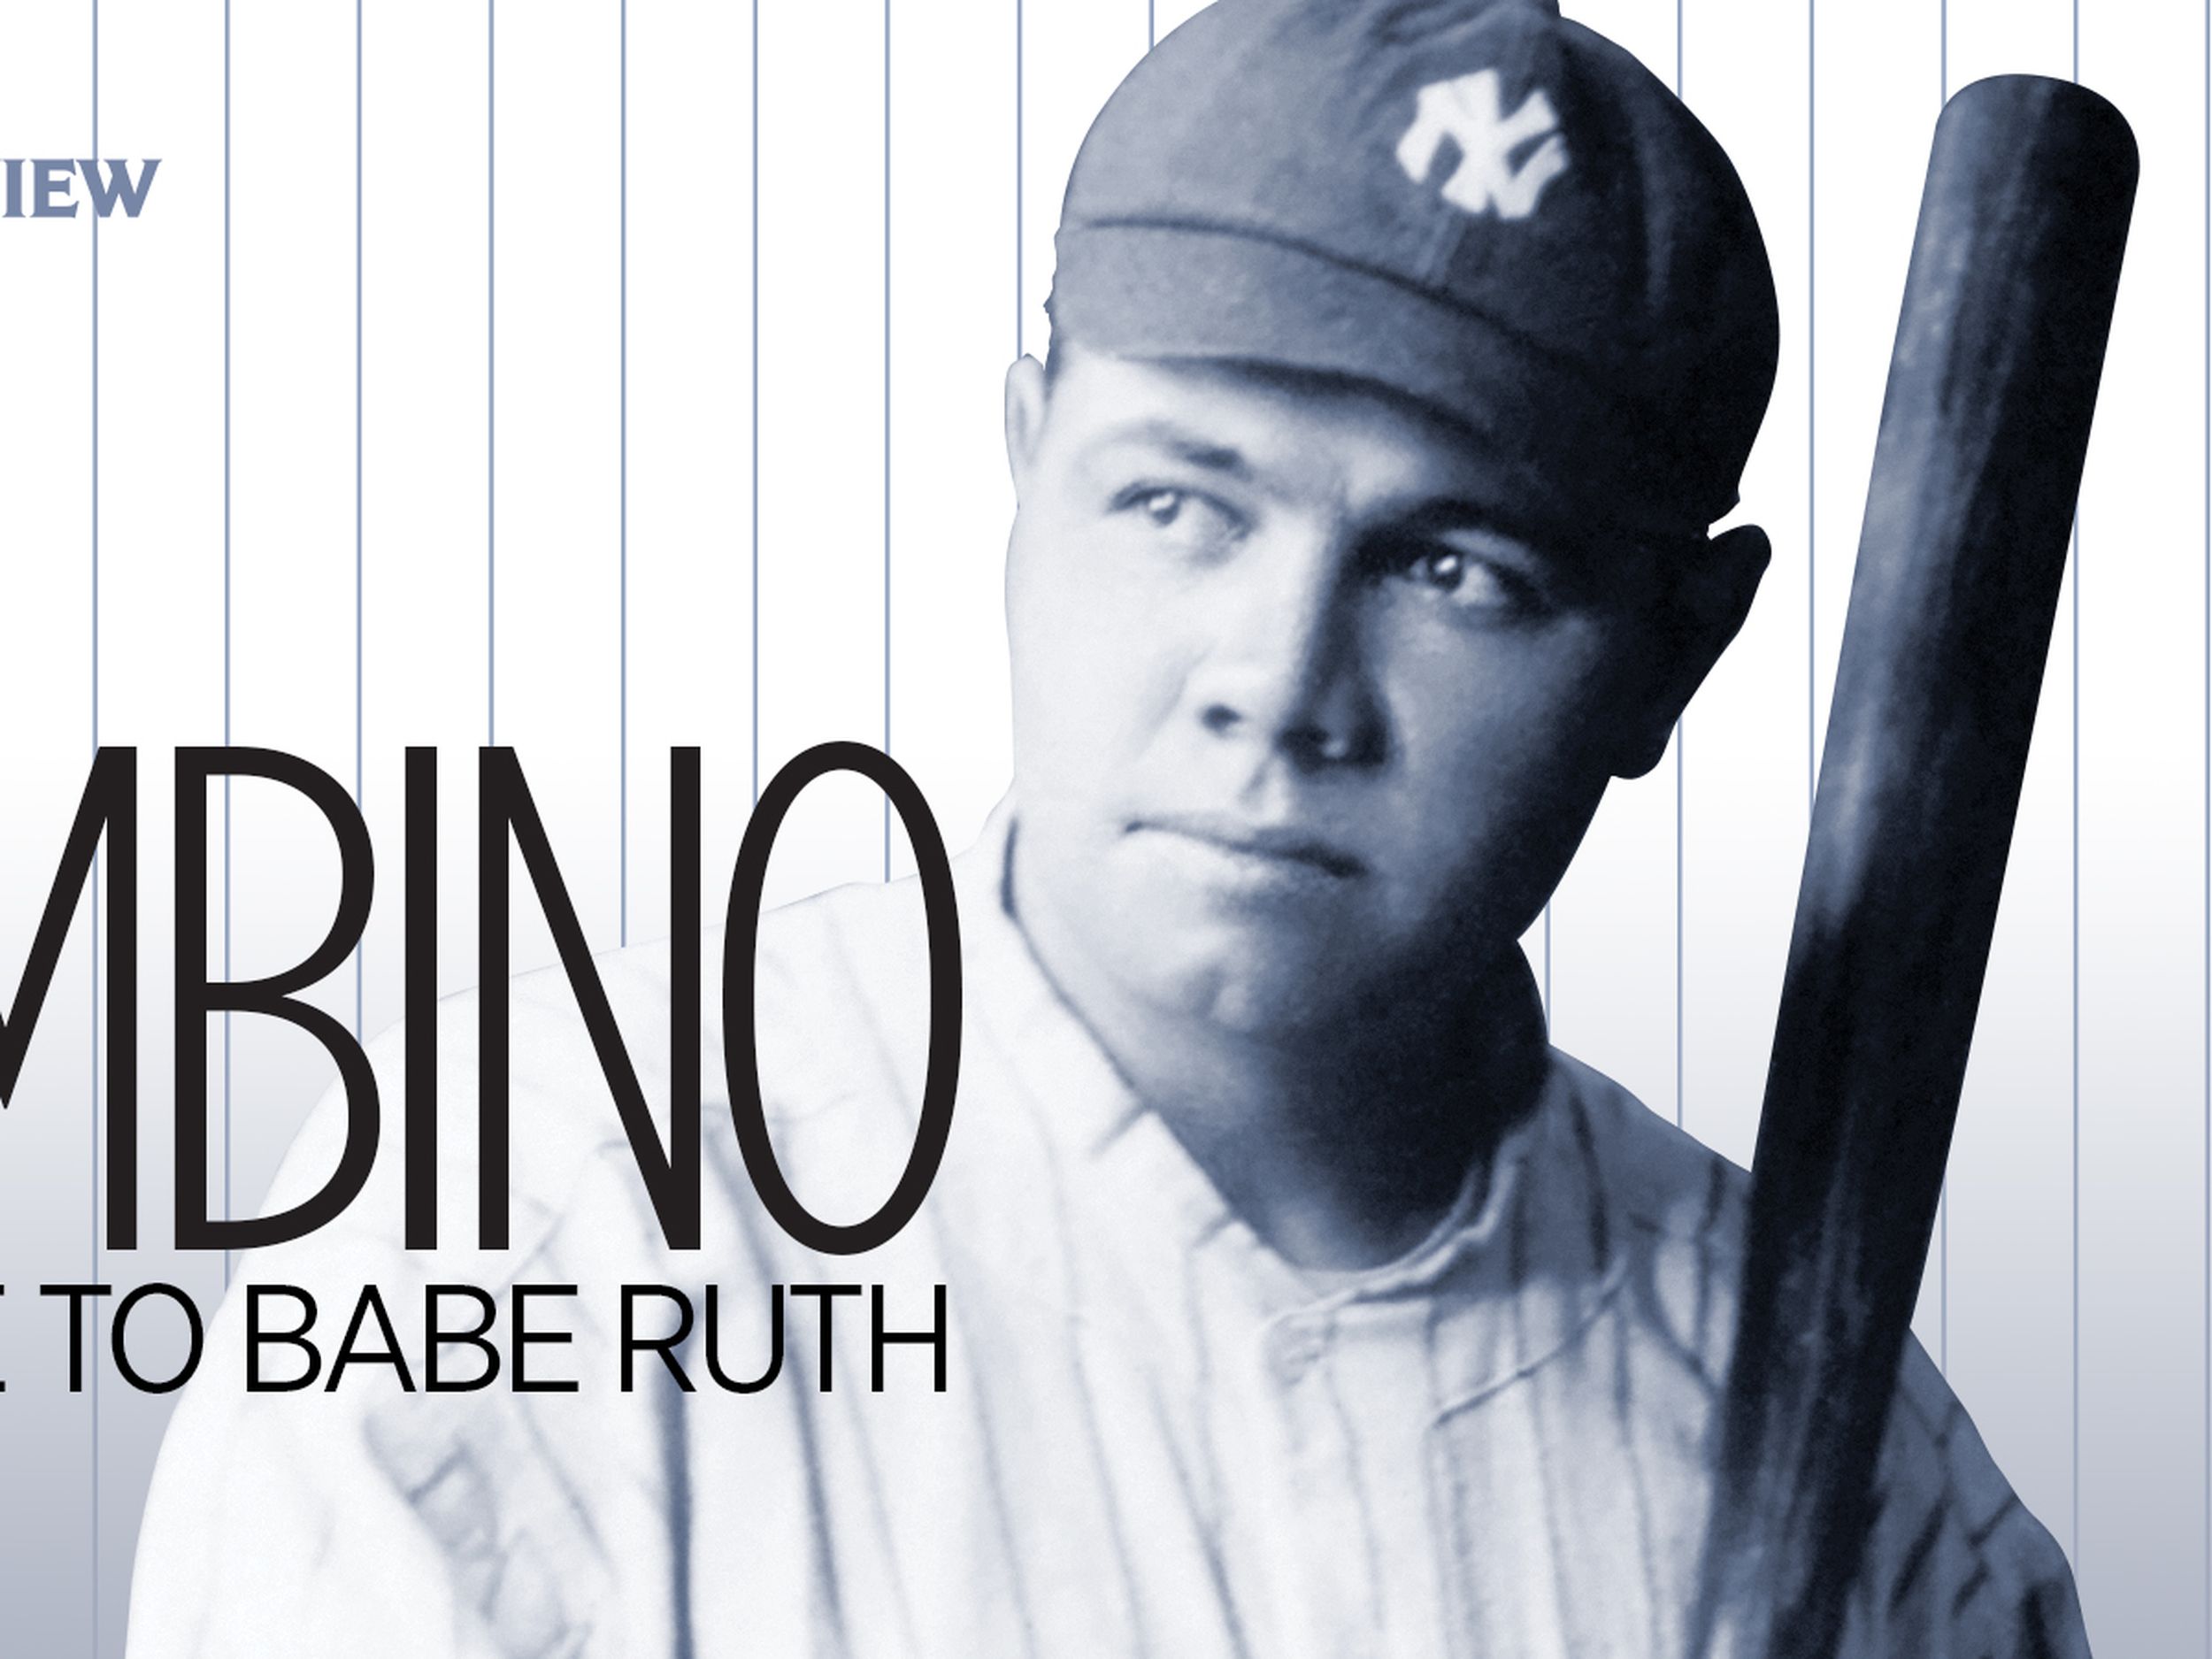 The career of baseball legend Babe Ruth